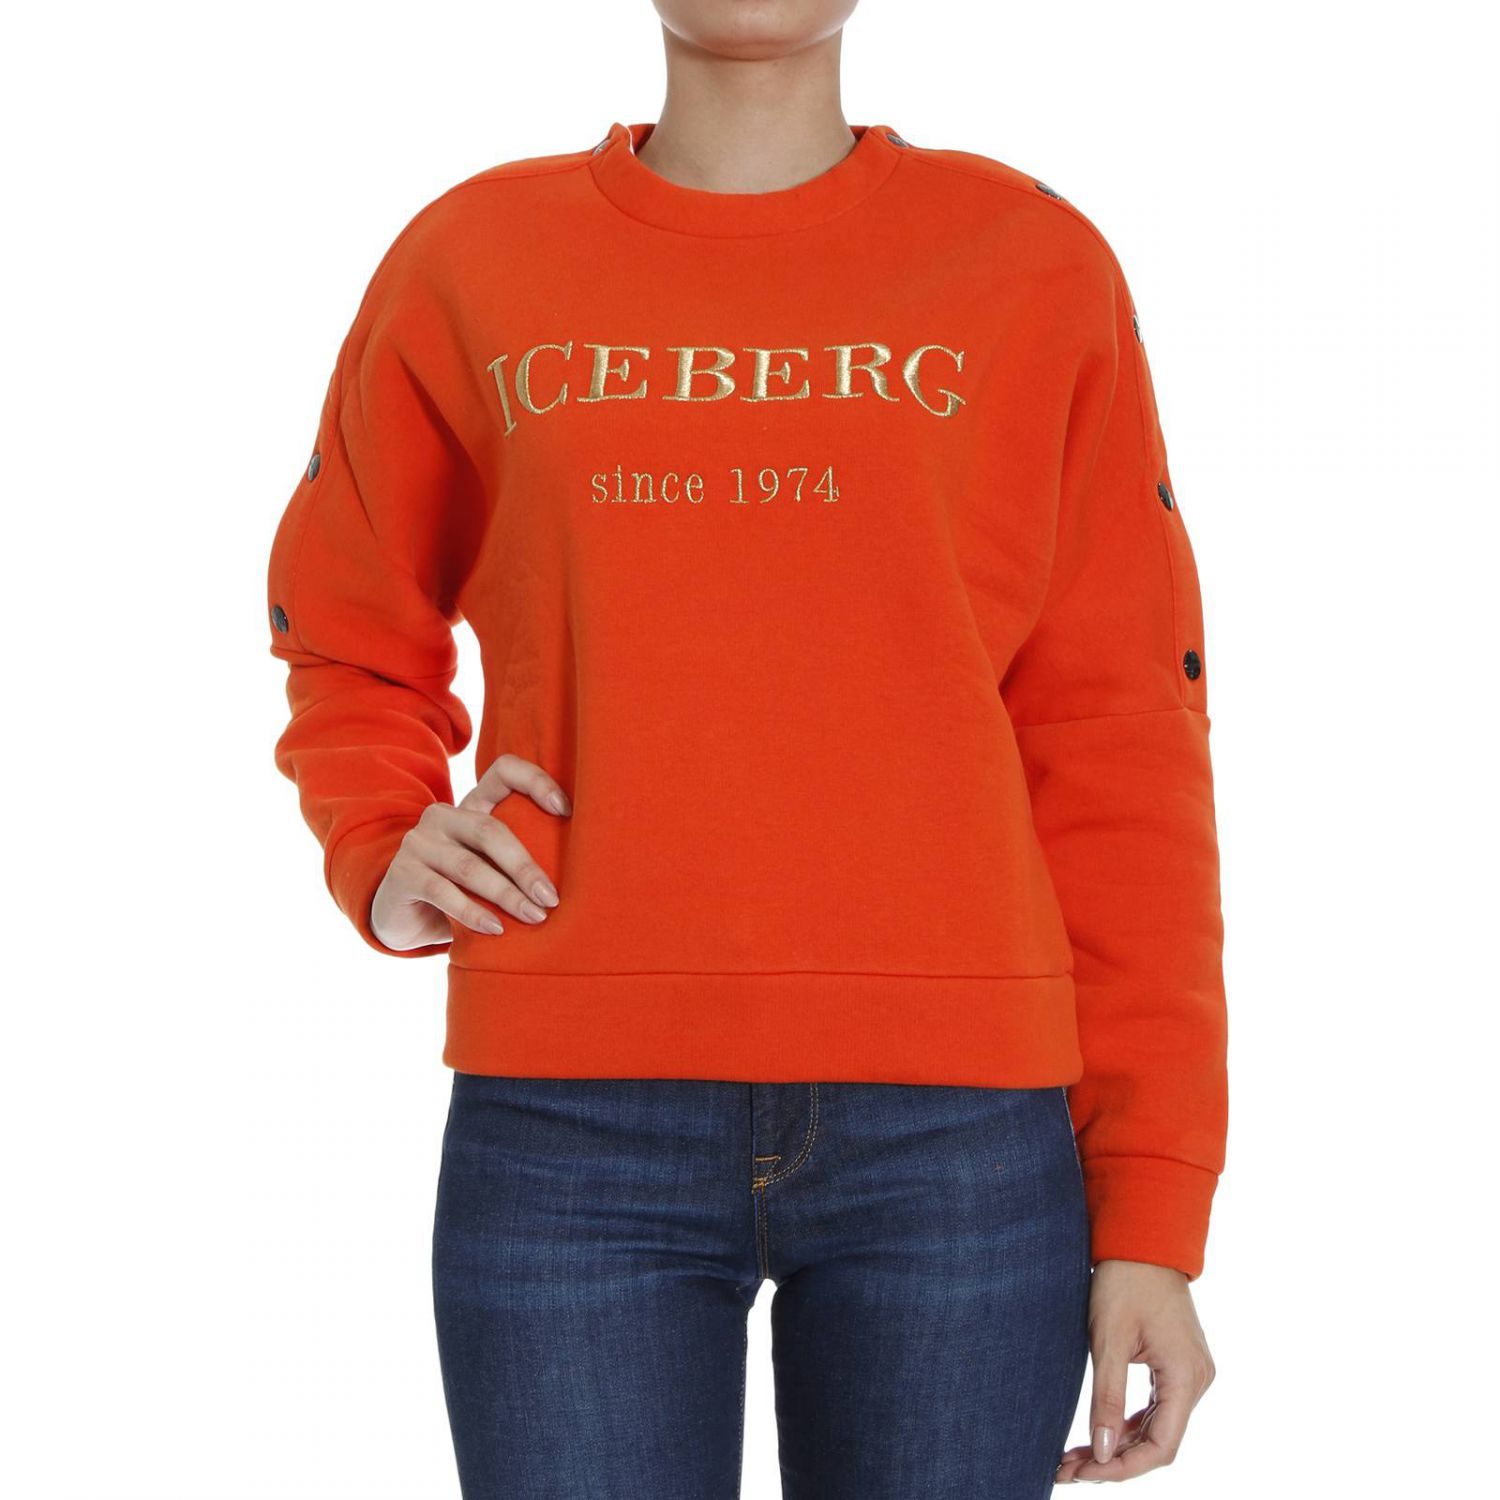 Lyst - Iceberg Sweater in Orange